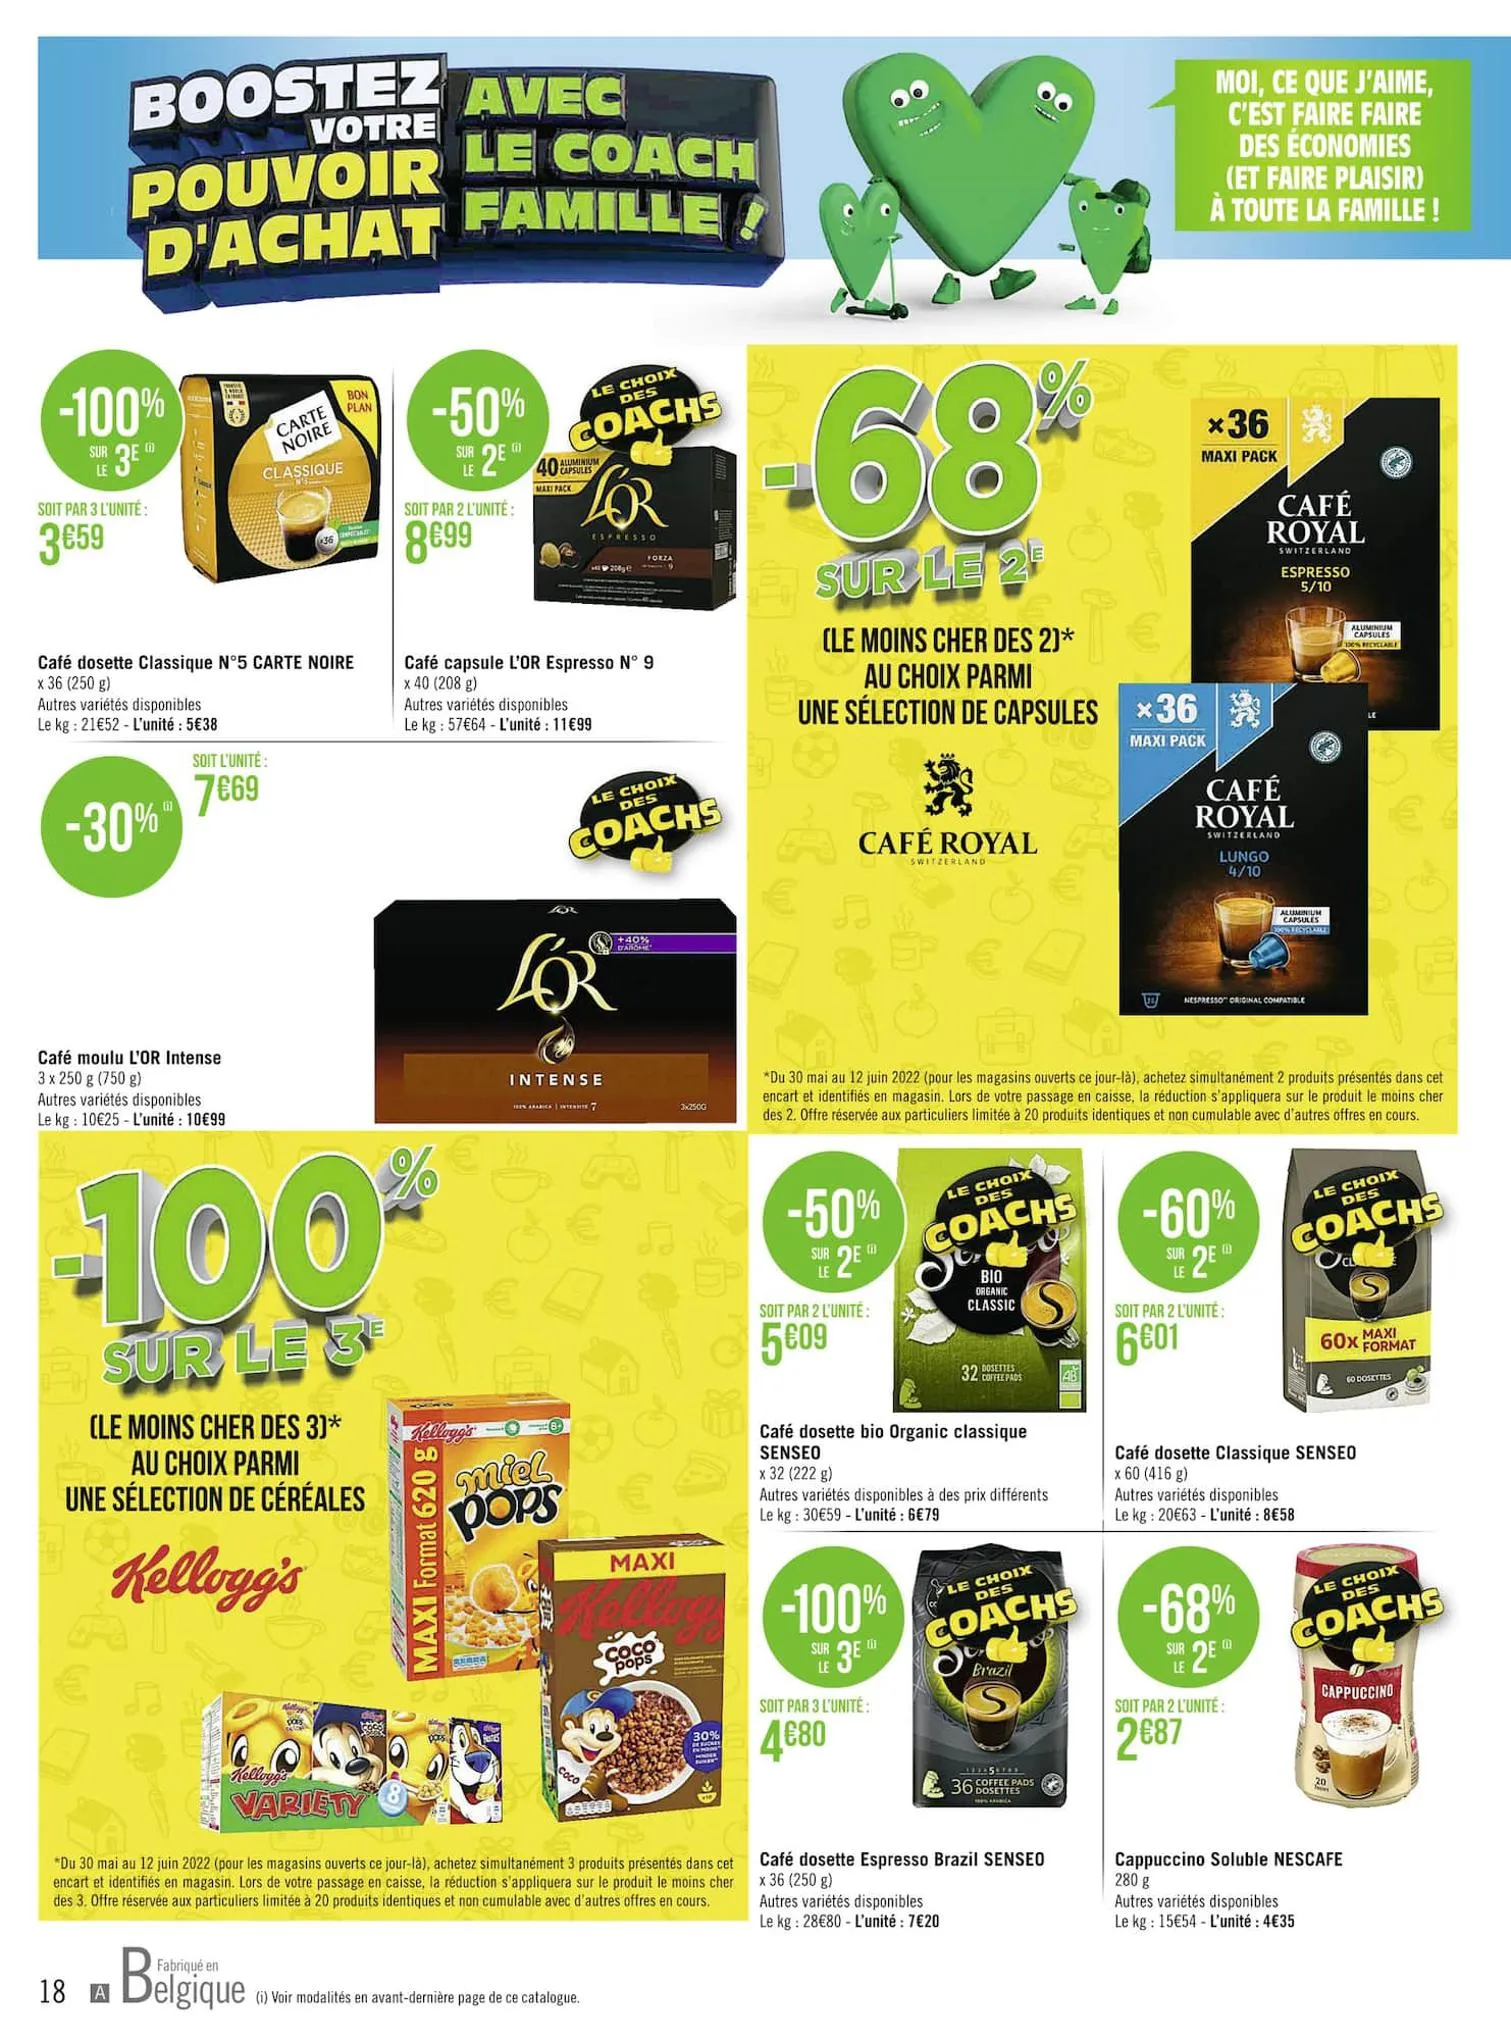 Catalogue Les coachs shopping, page 00018